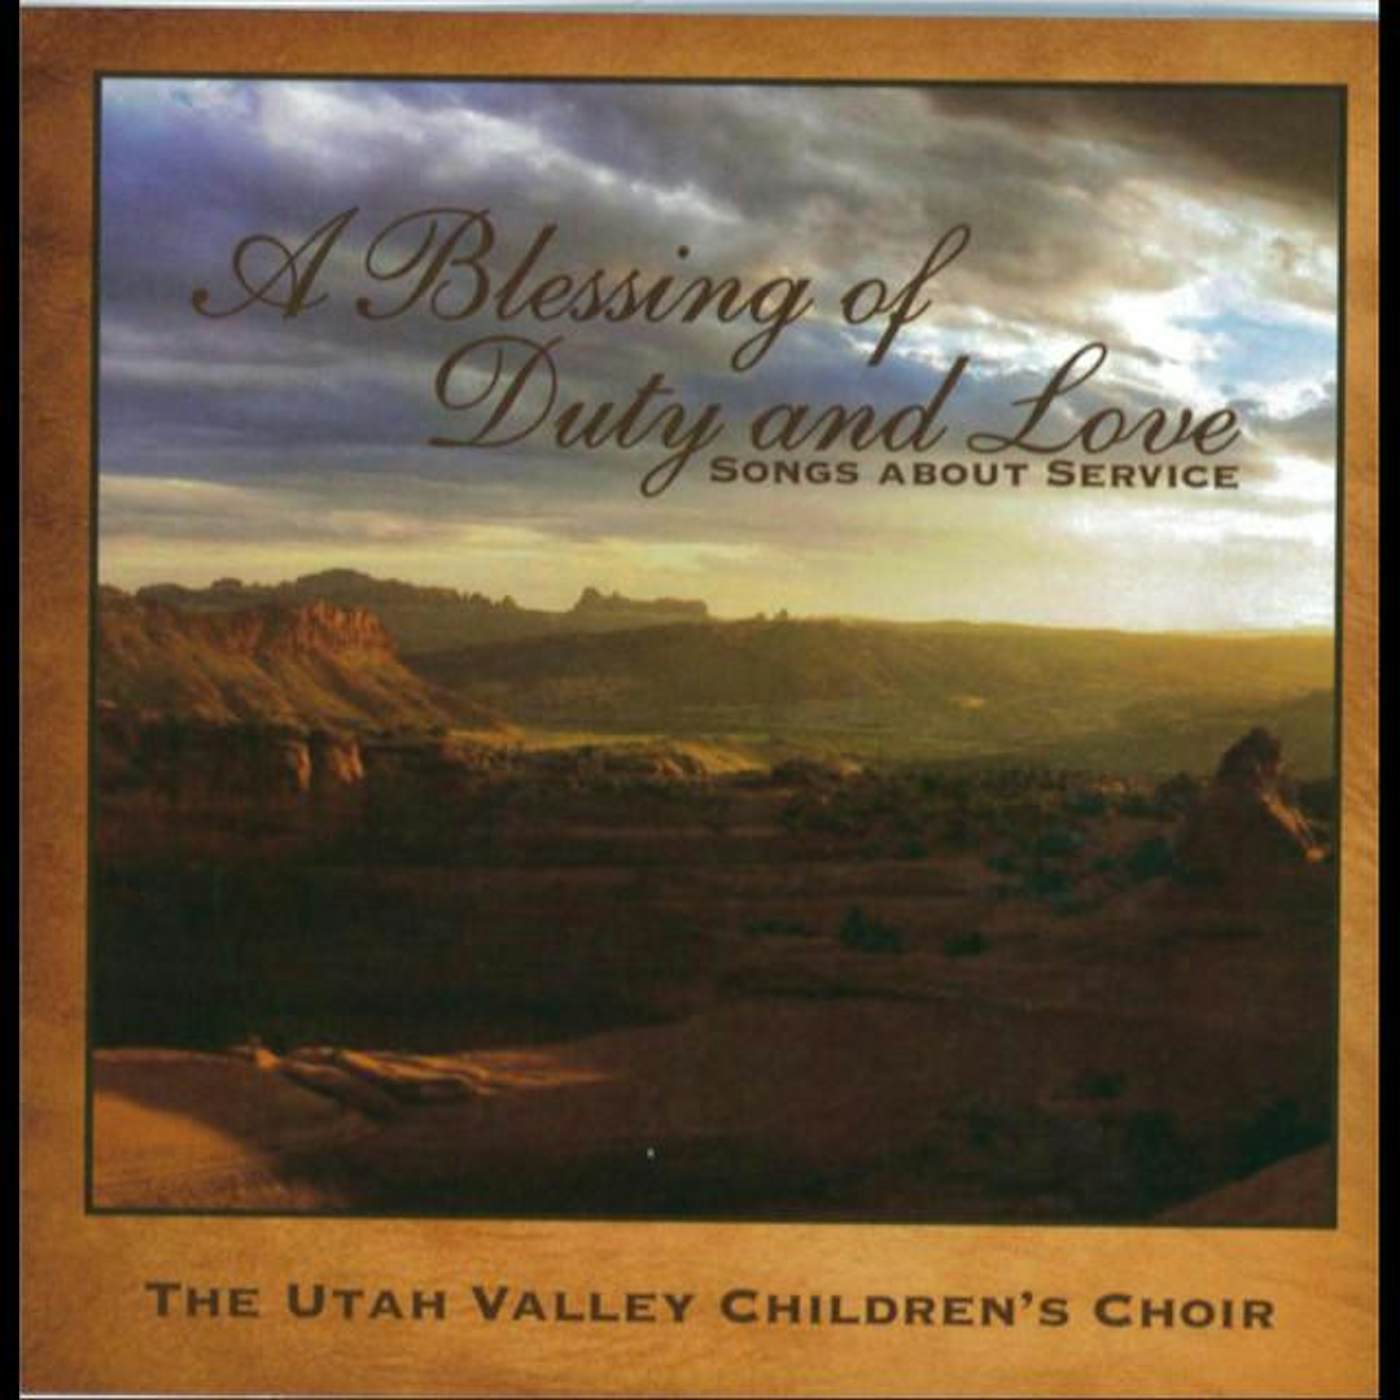 The Utah Valley Children's Choir